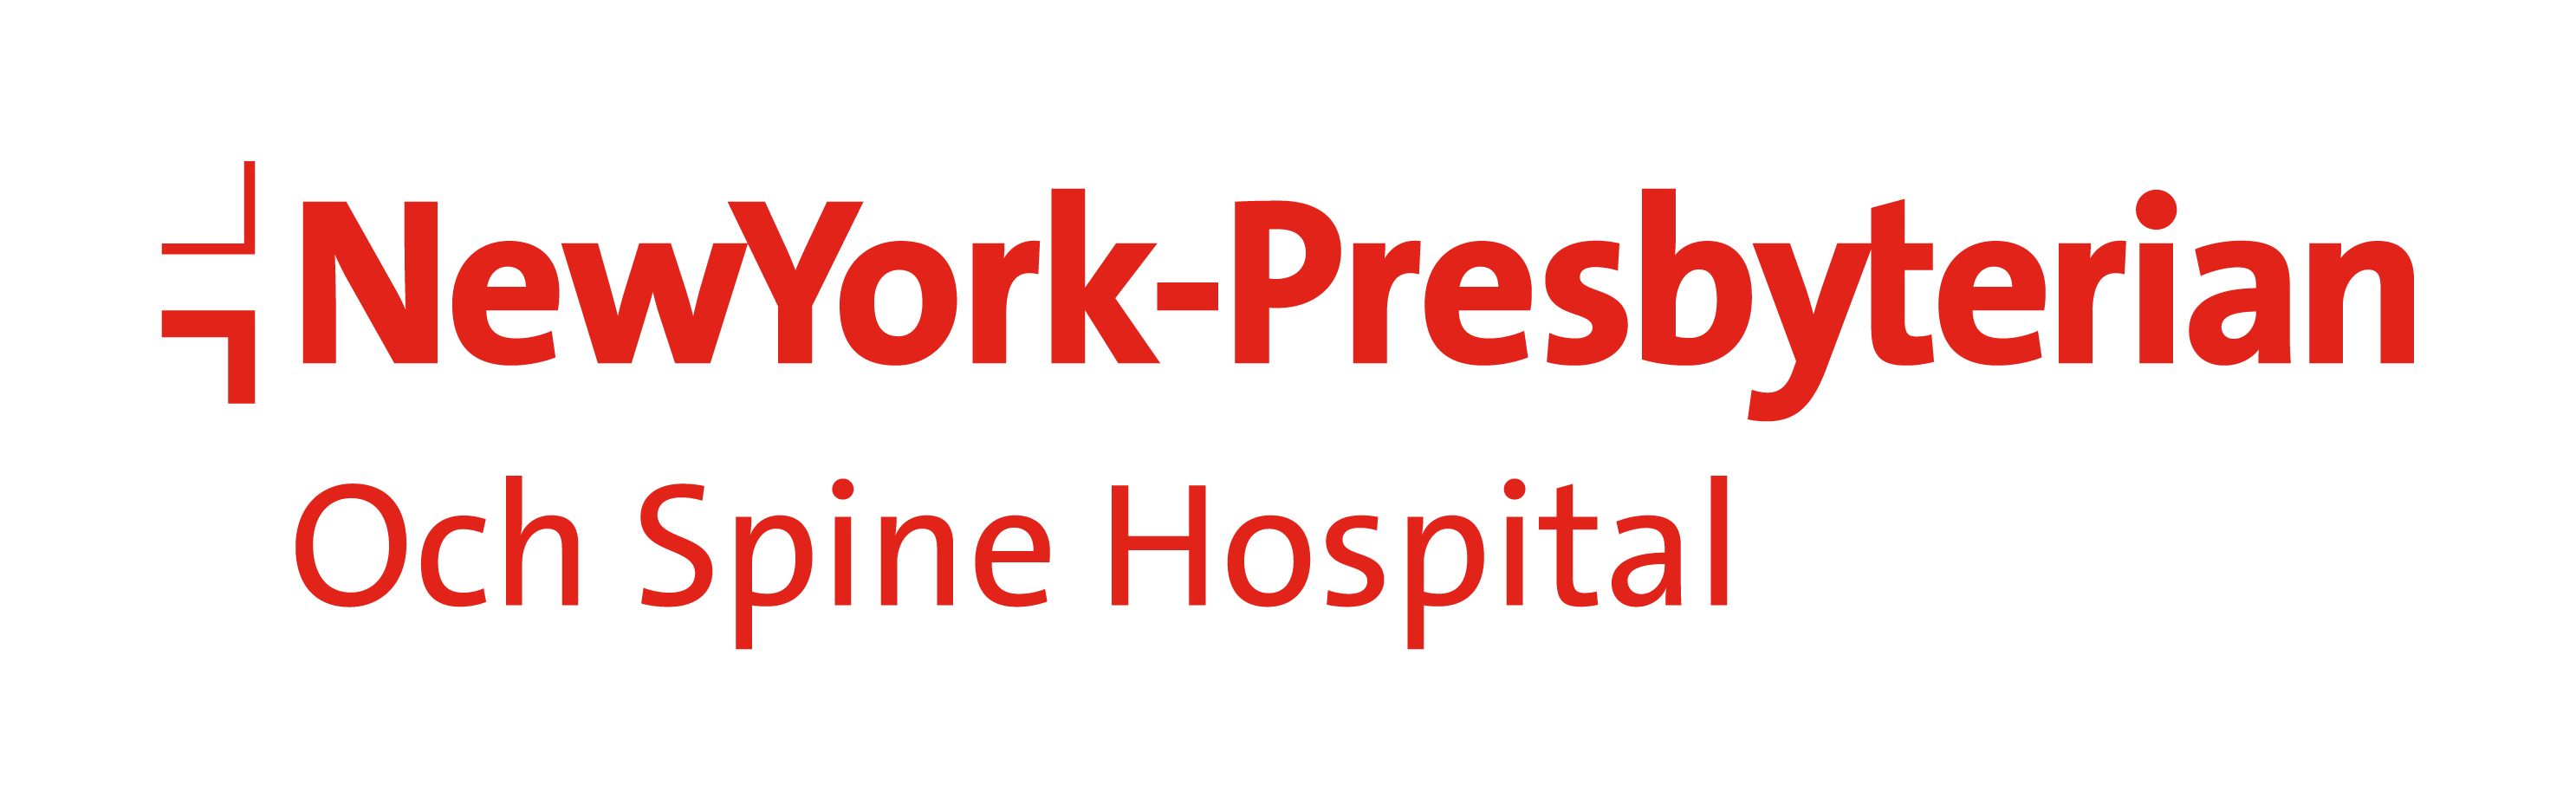 NewYork-Presbyterian Och Spine Hospital logo